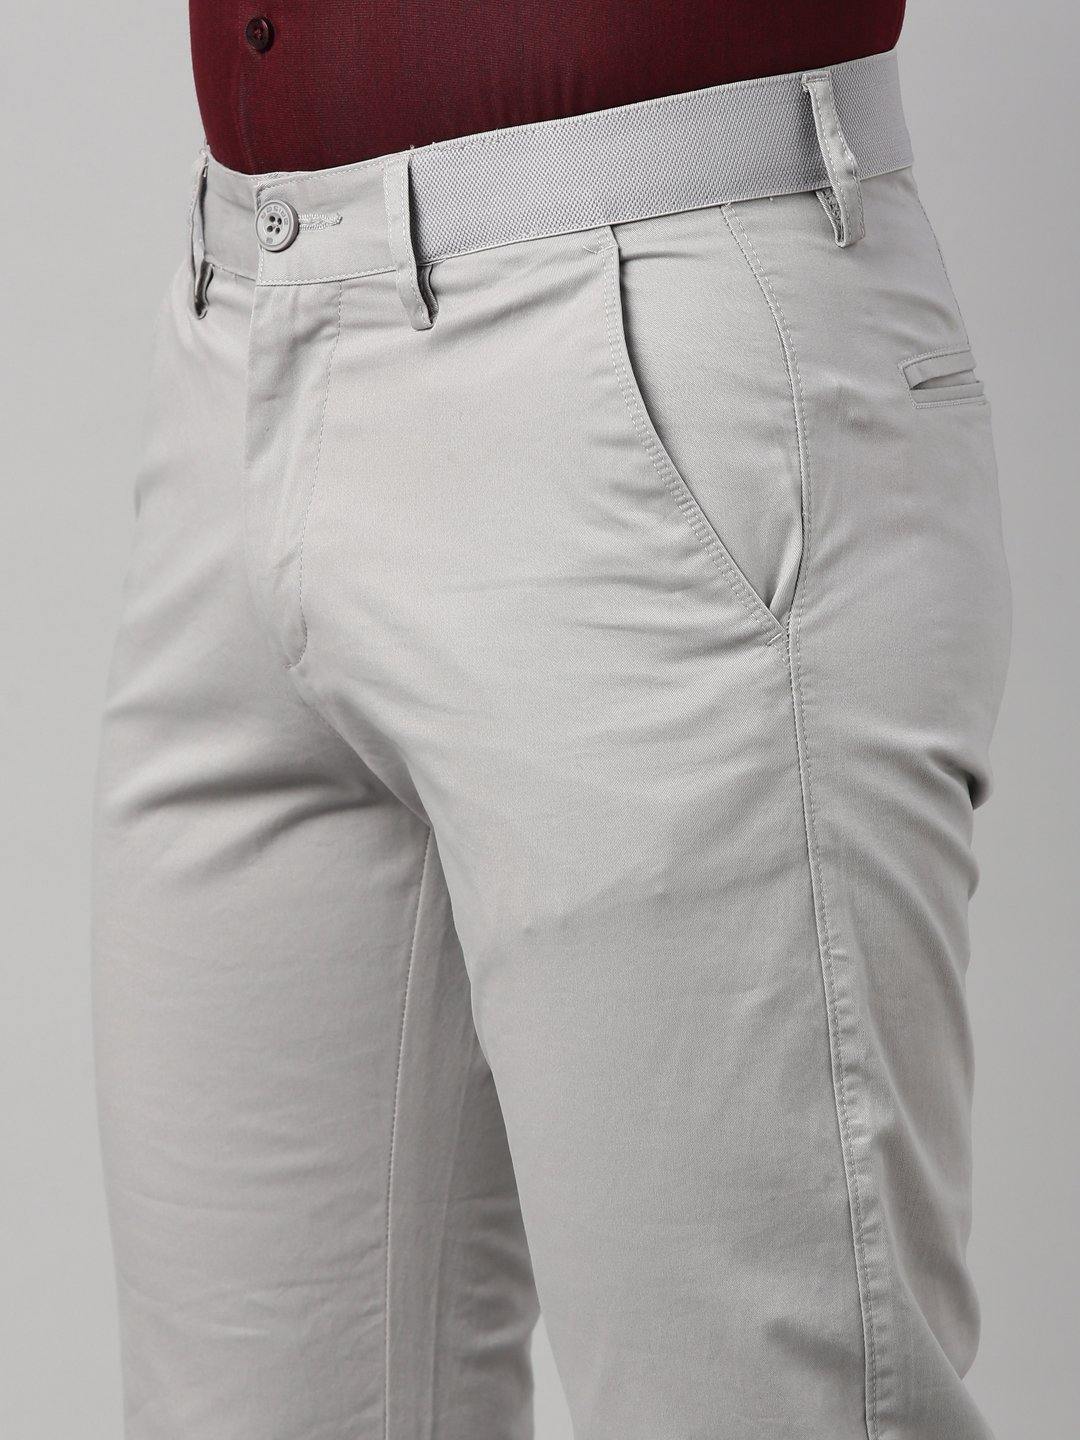 Buy Women Grey Regular Fit Solid Business Casual Trousers Online  454306   Allen Solly